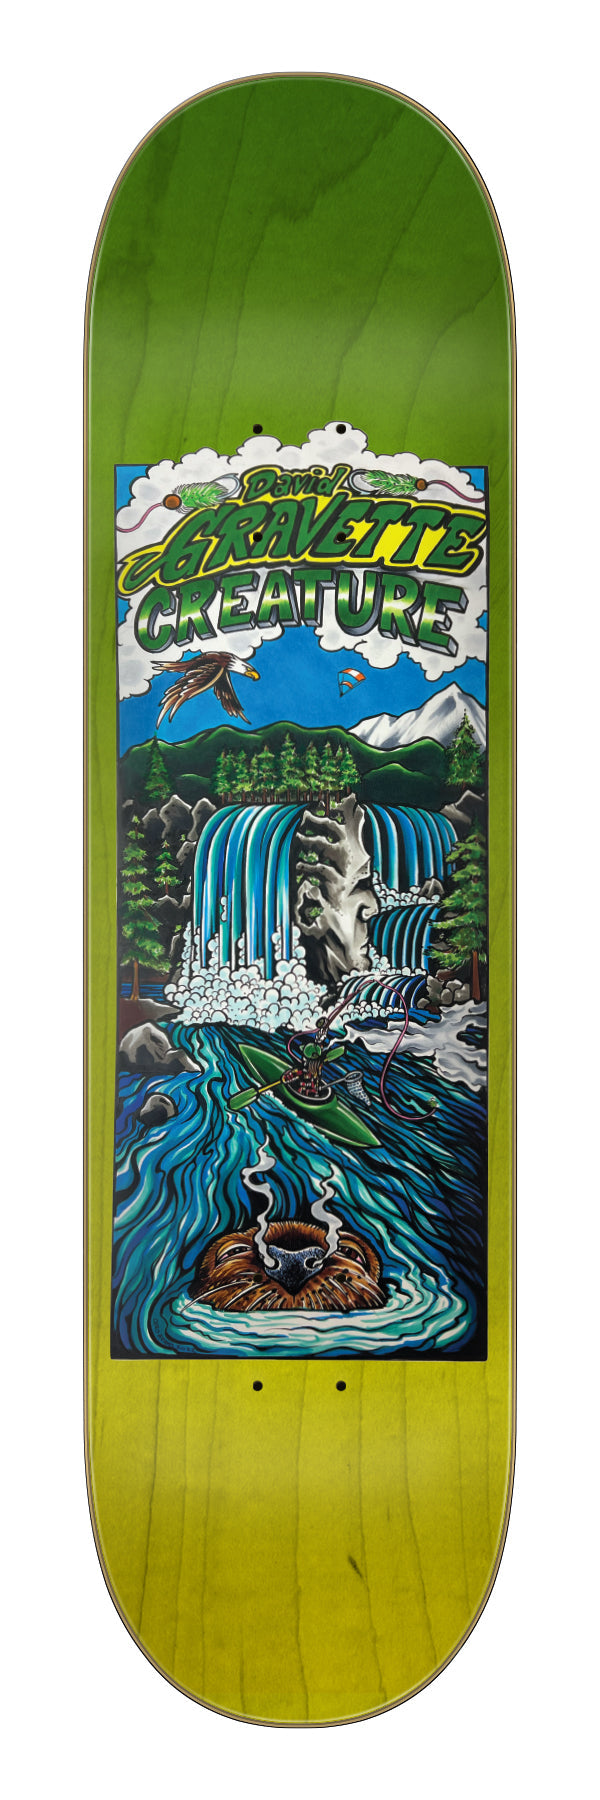 8.3in Gravette Hippie Falls Creature Skateboard Deck